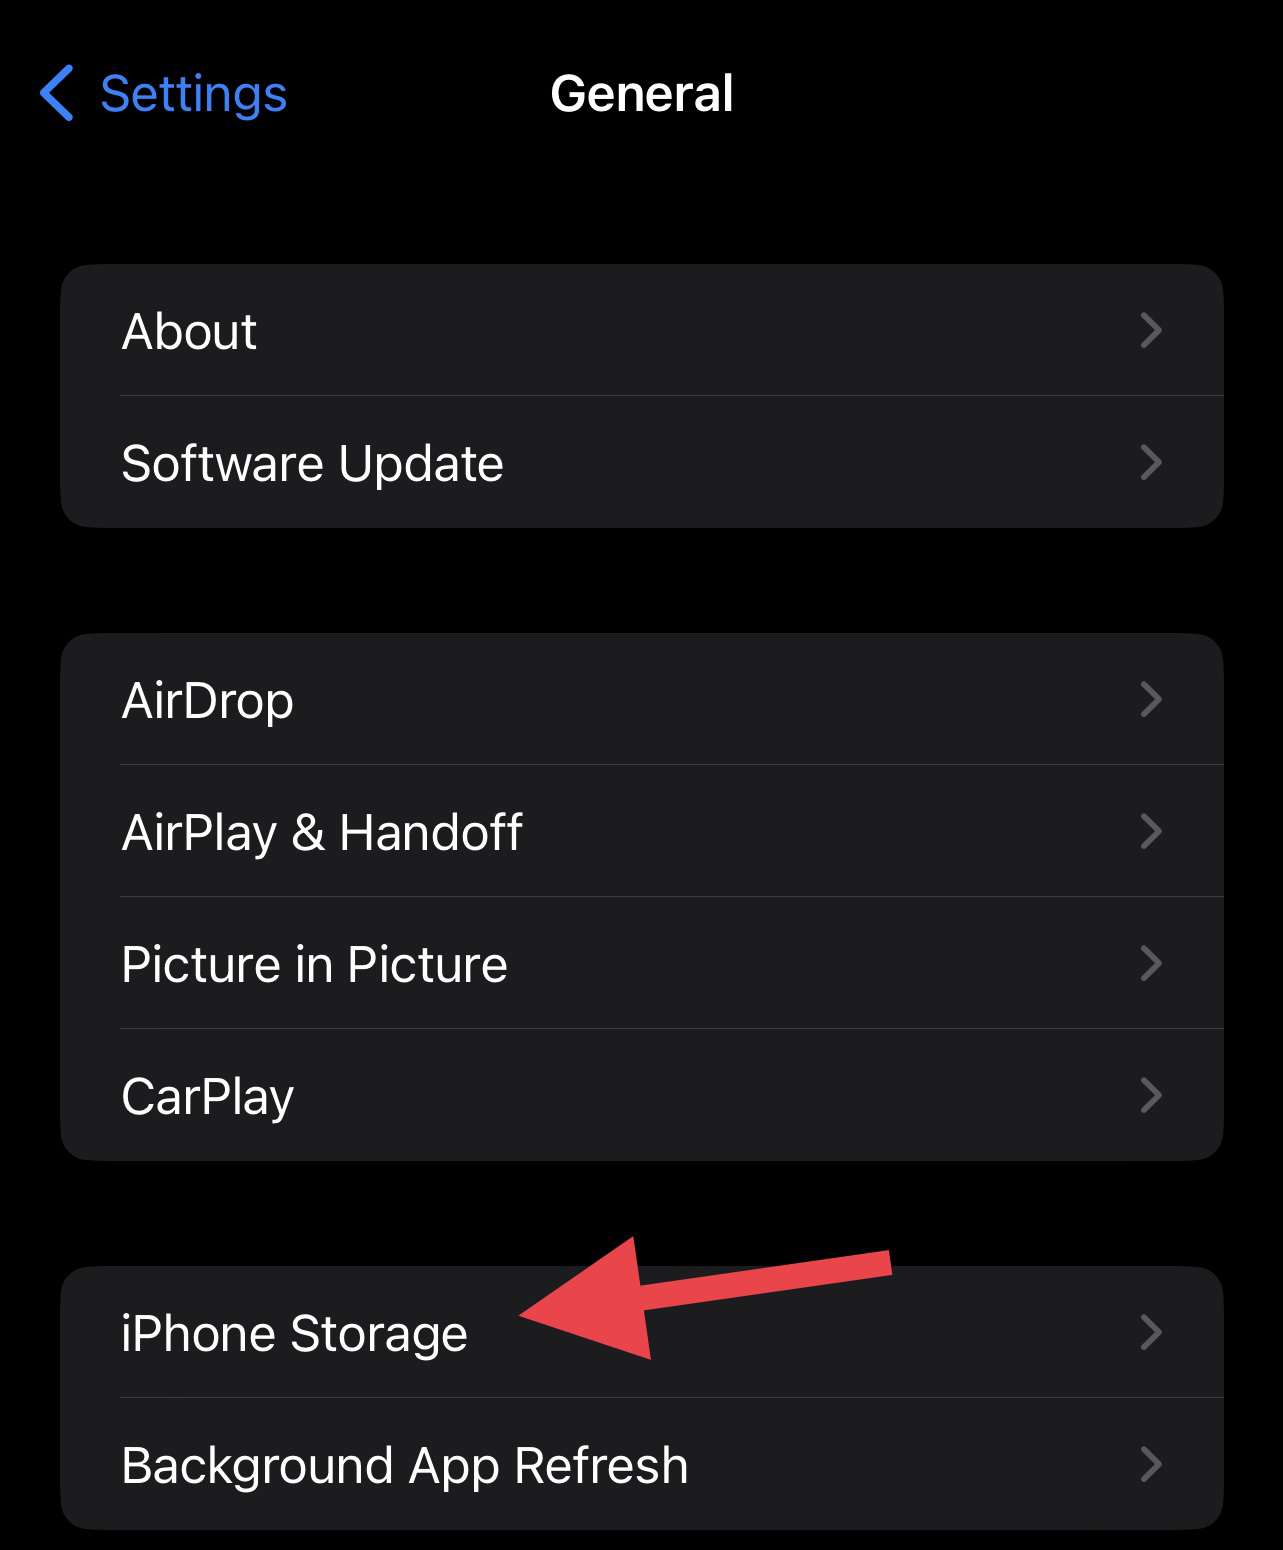 iphone storage